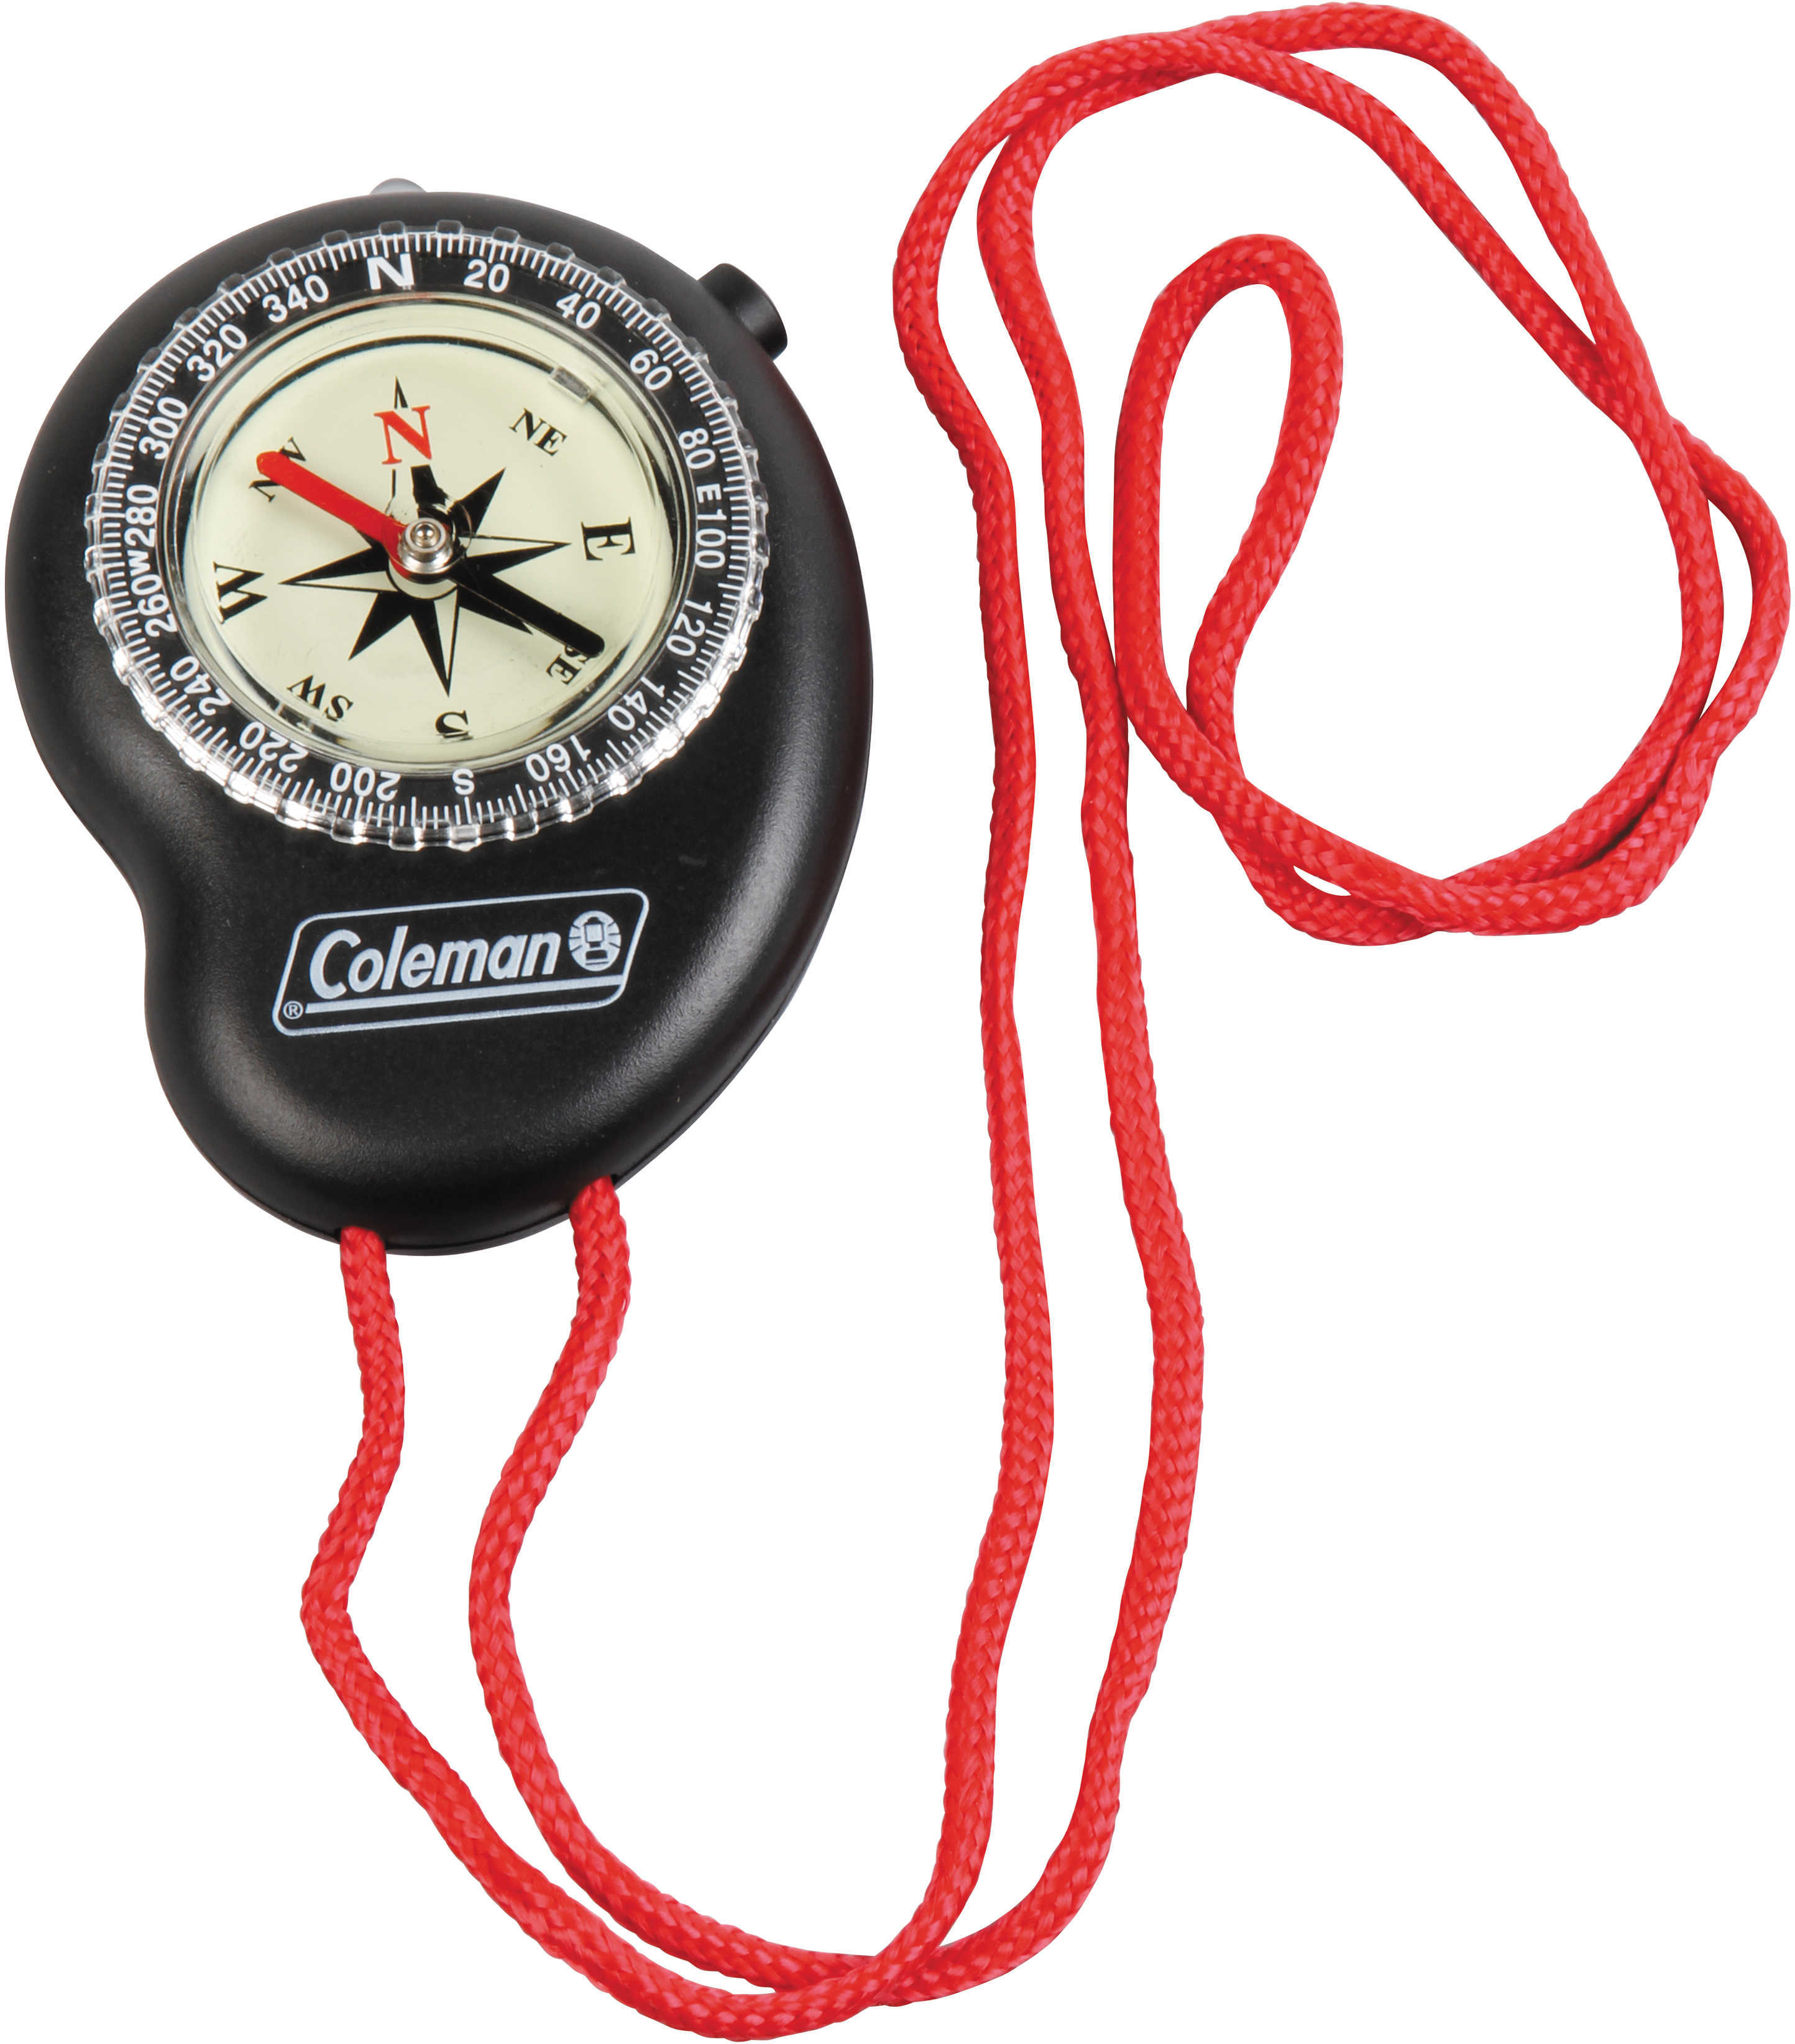 Coleman Compass w/LED Light Md: 2000016467